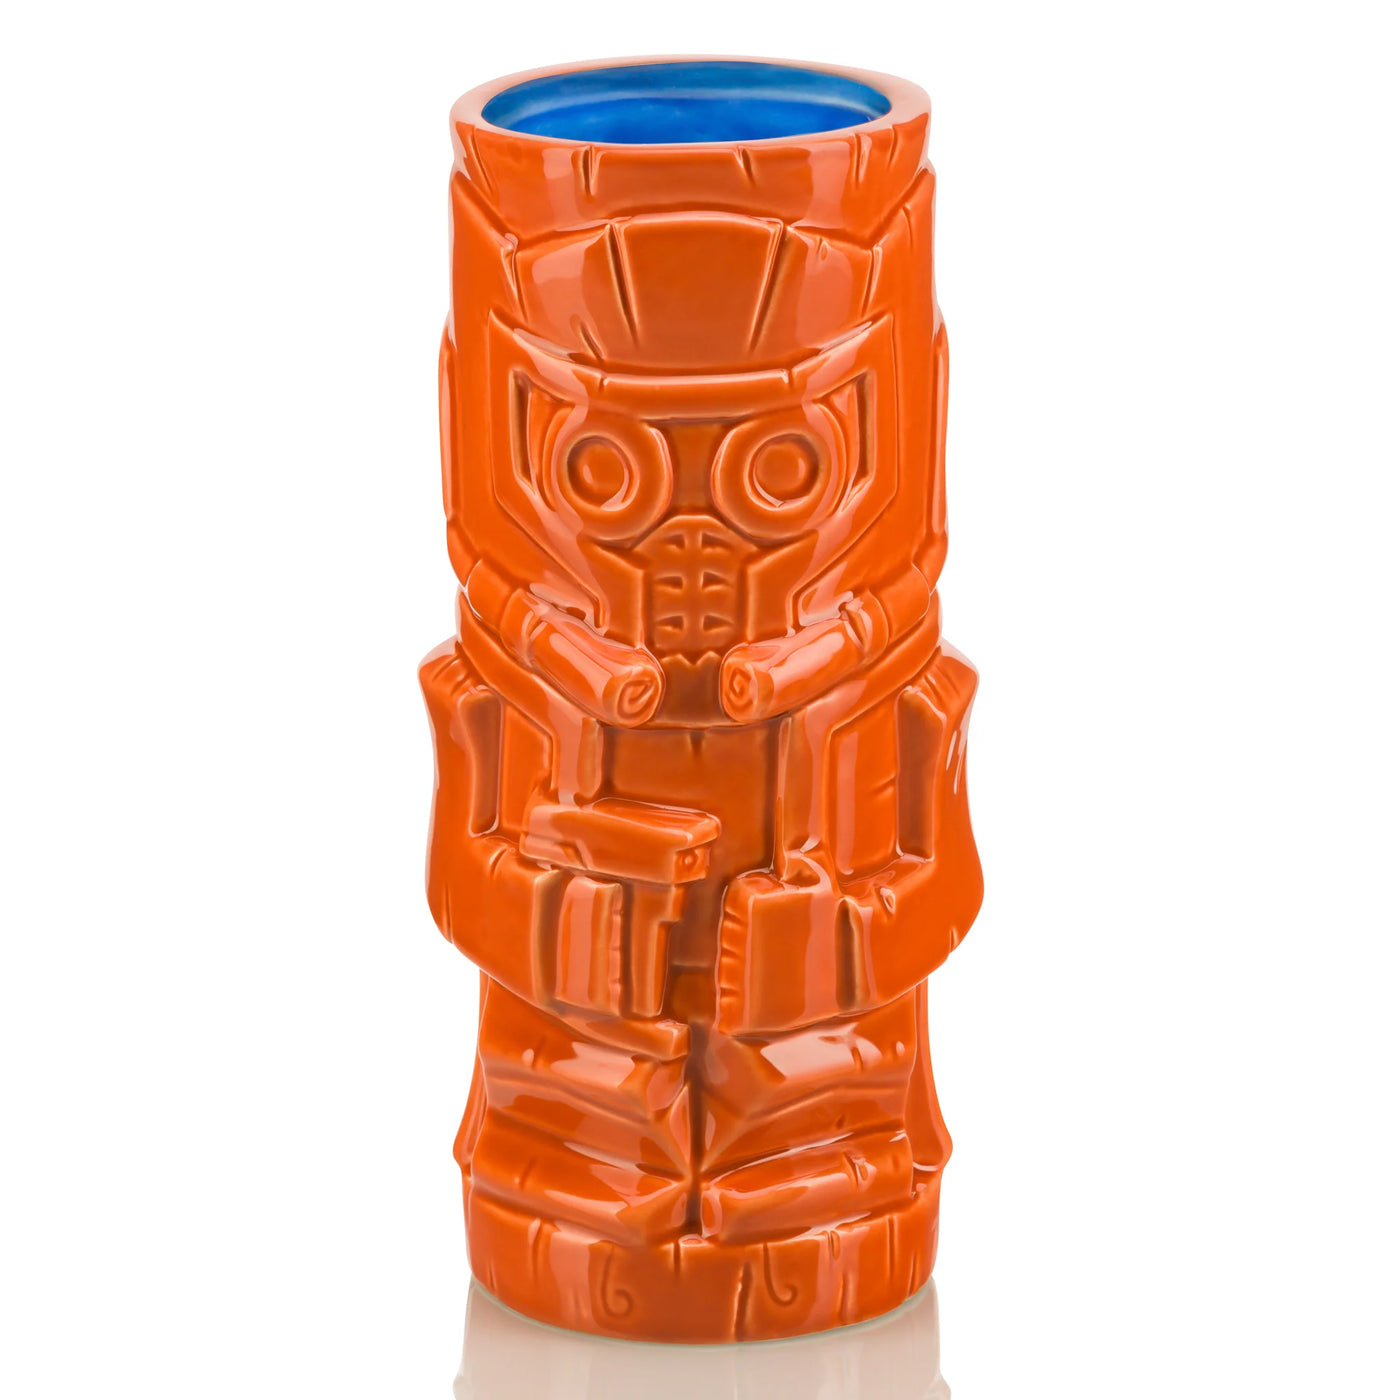 Marvel The Guardians of the Galaxy Star-lord 14oz Ceramic Mug